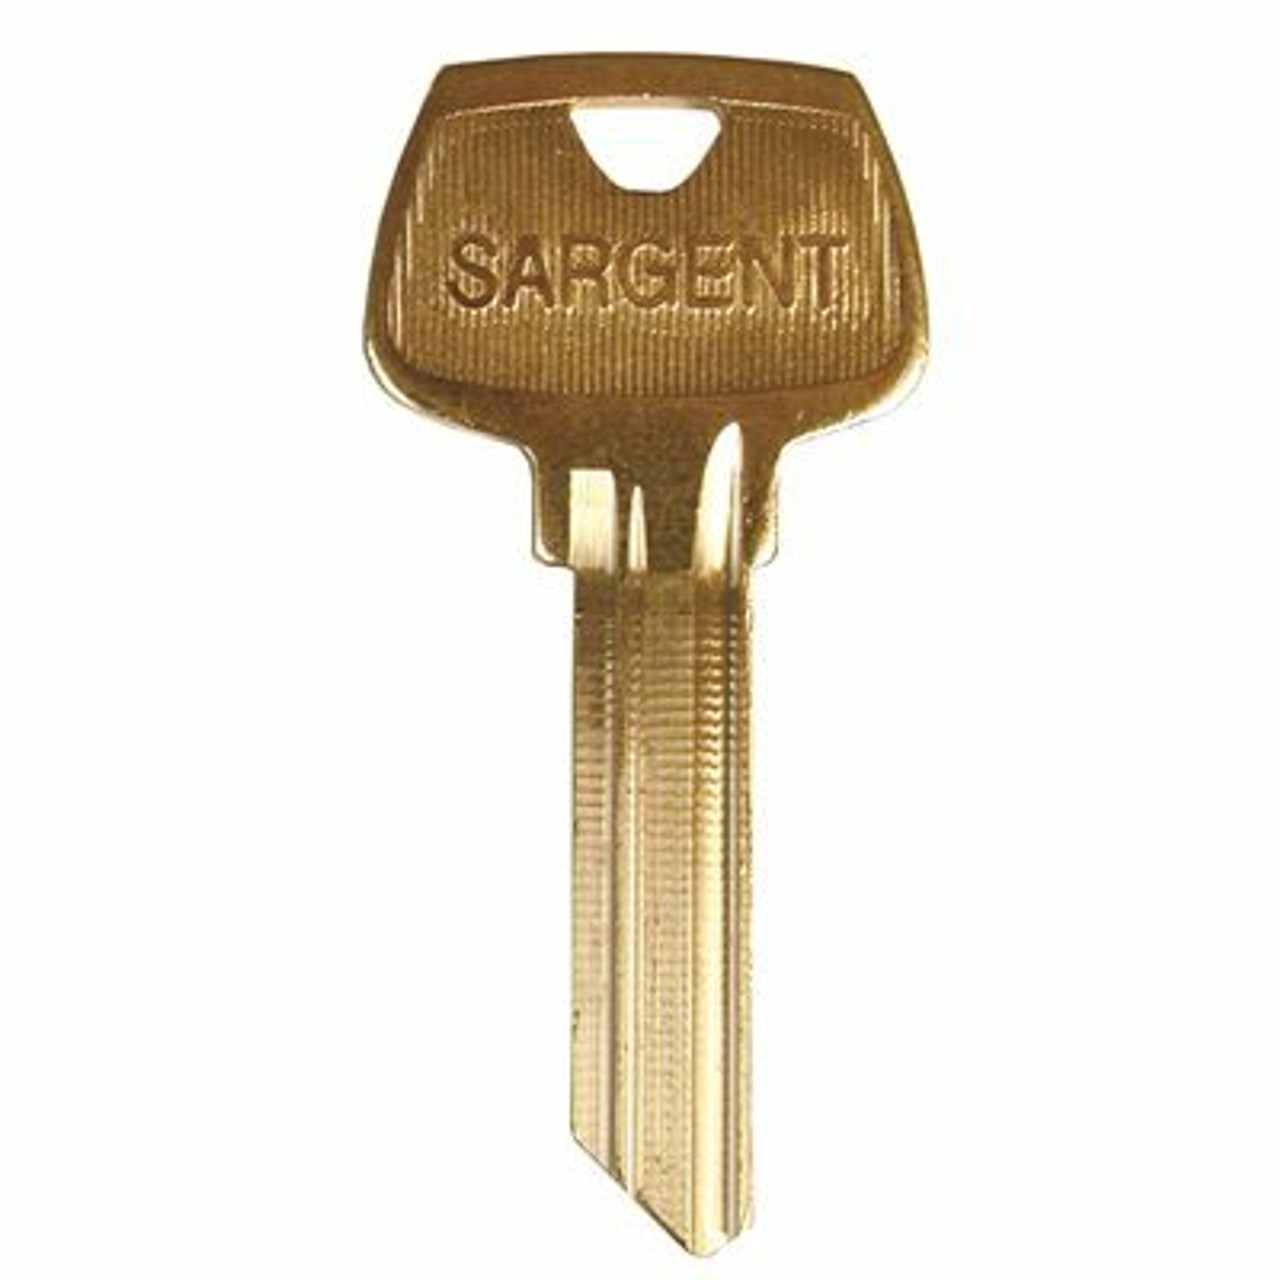 Sargent & Co Sargent Keyblank 6 Pin Hn